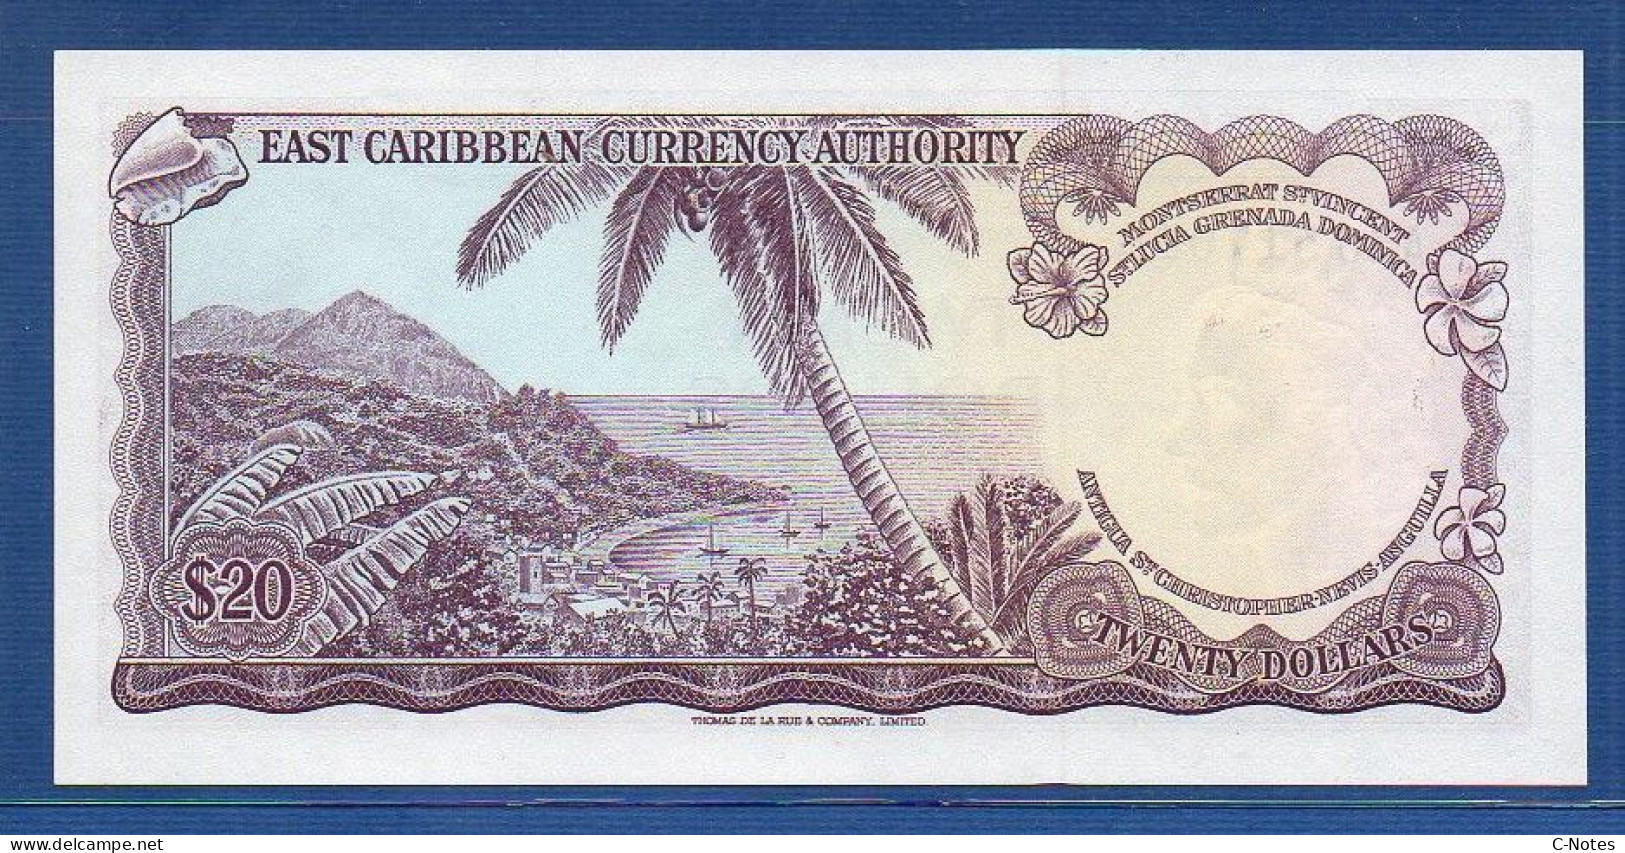 EAST CARIBBEAN STATES - St. Lucia - P.15L – 20 Dollars ND (1965) UNC, S/n A23 517088 - Oostelijke Caraïben